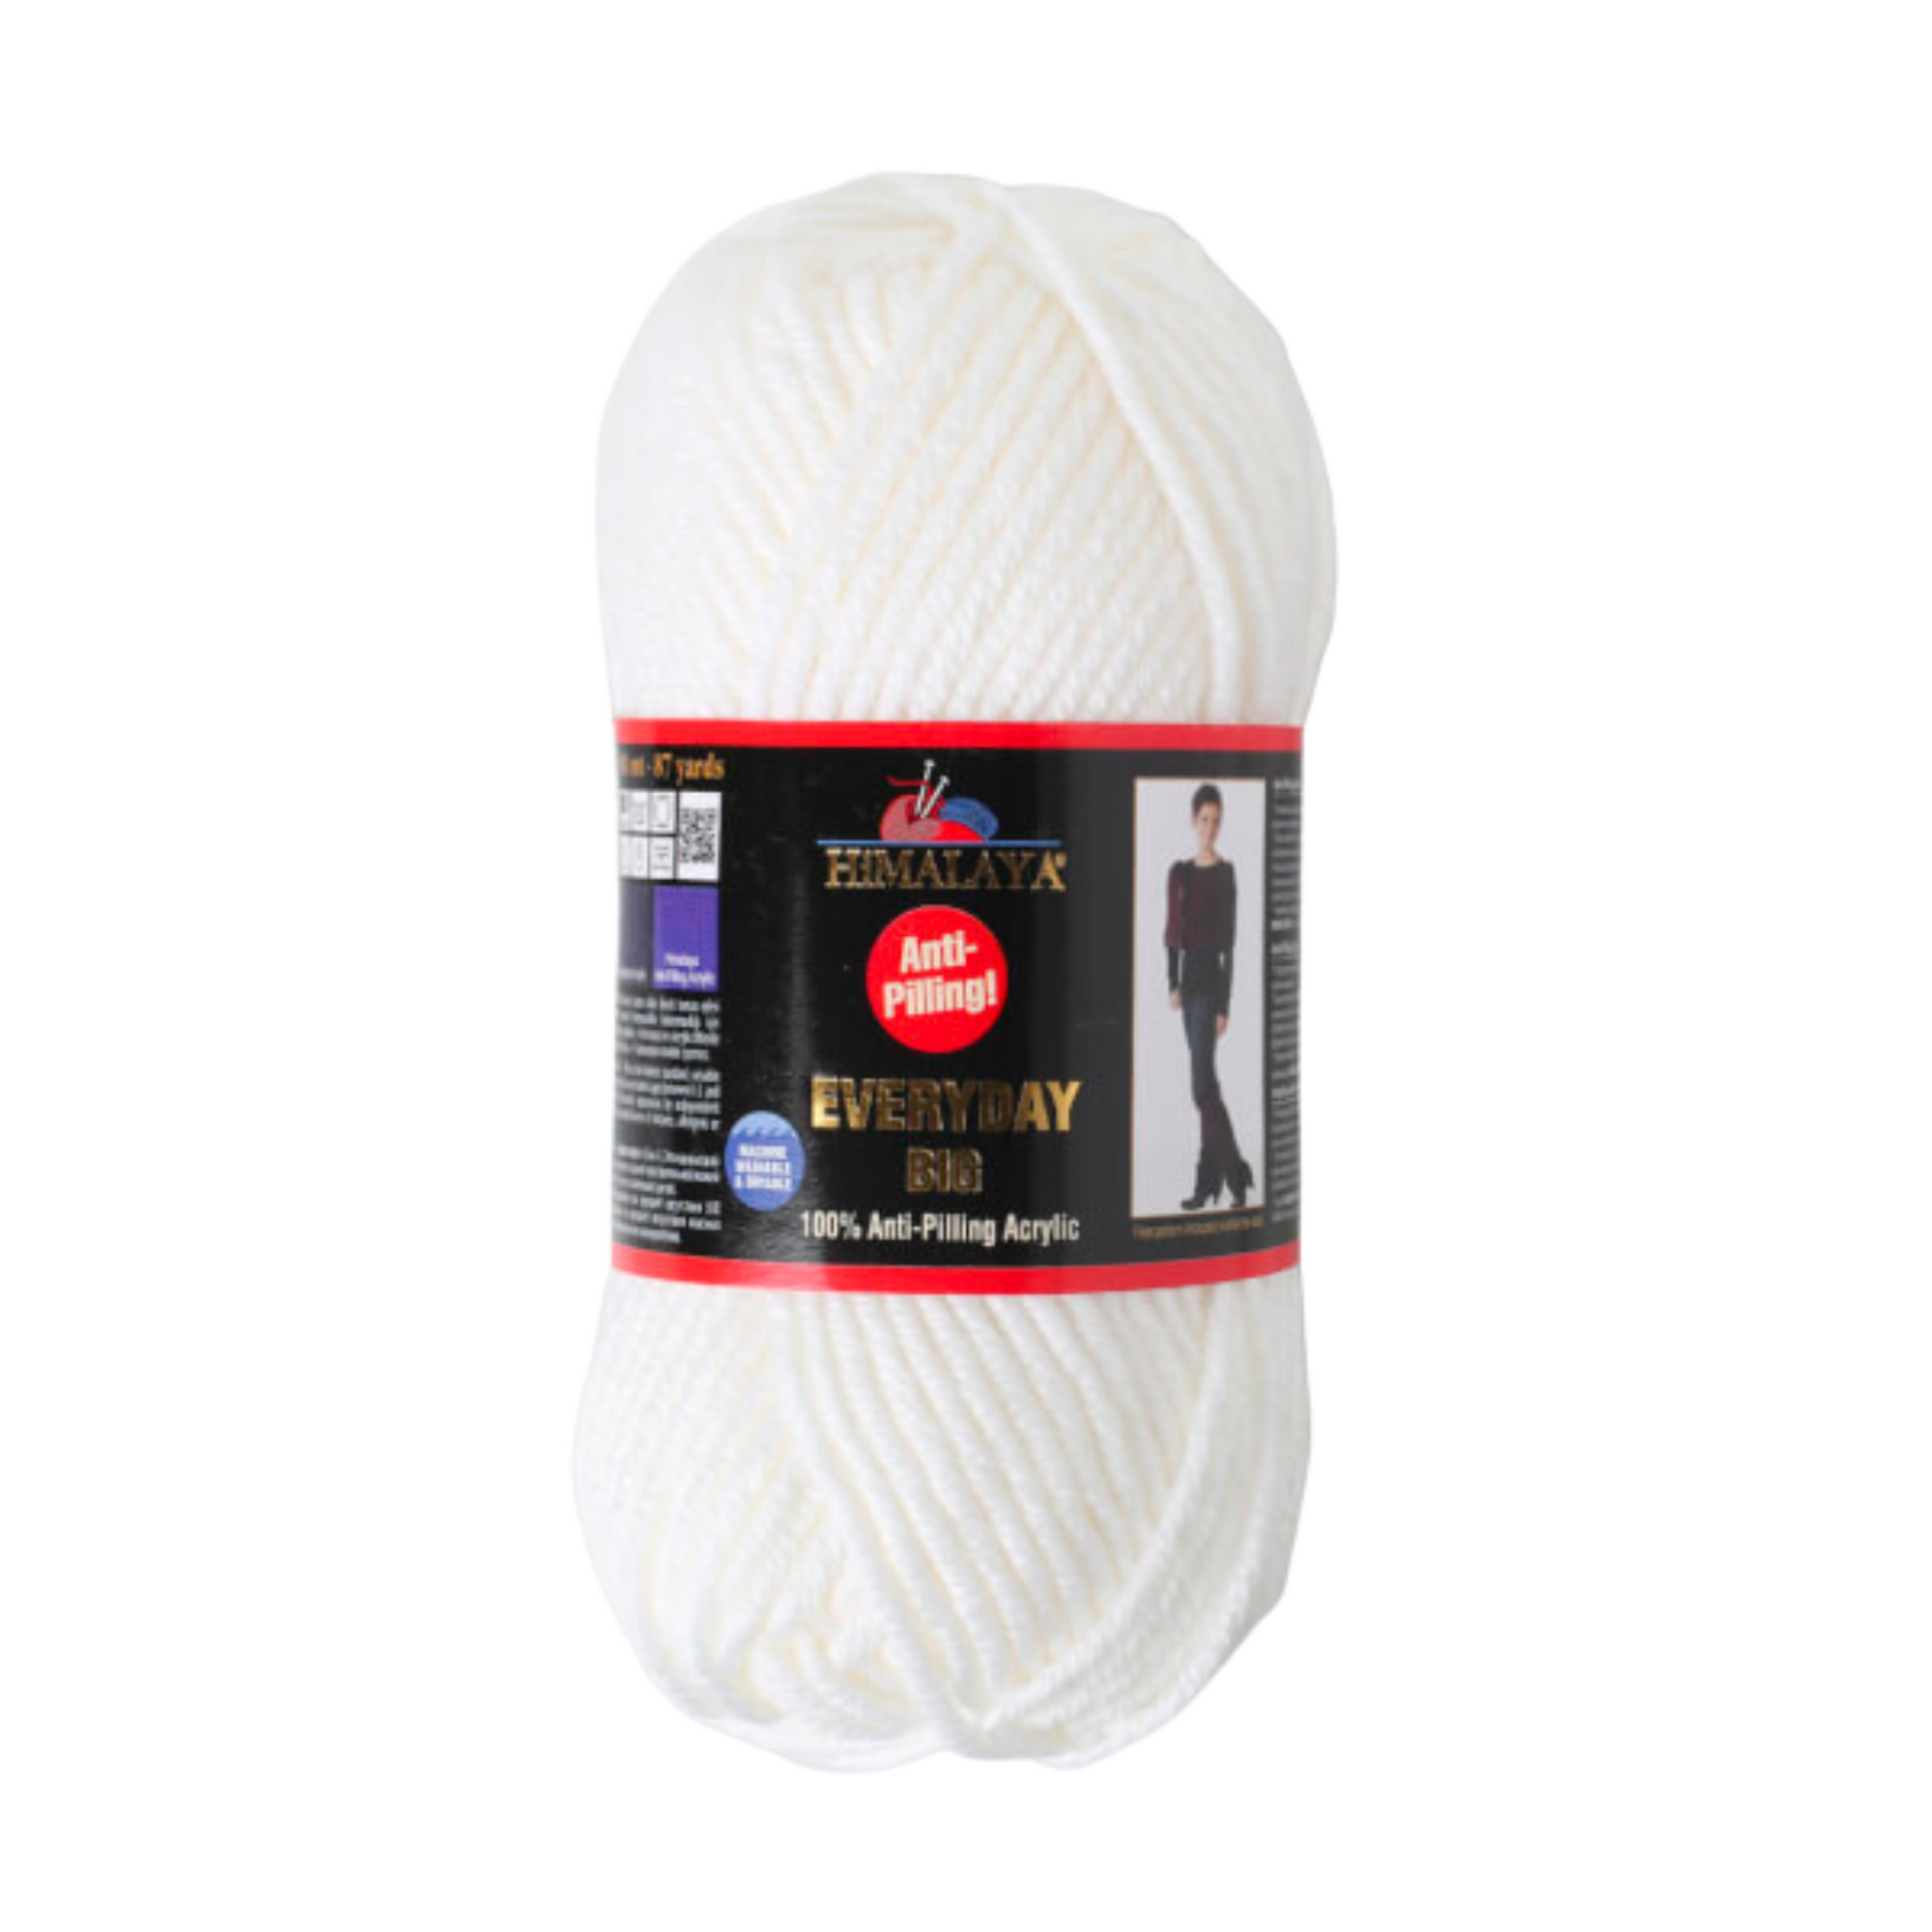 Himalaya Everyday 100% Anti-Pilling Acrylic Yarn, Fuchsia - 70813